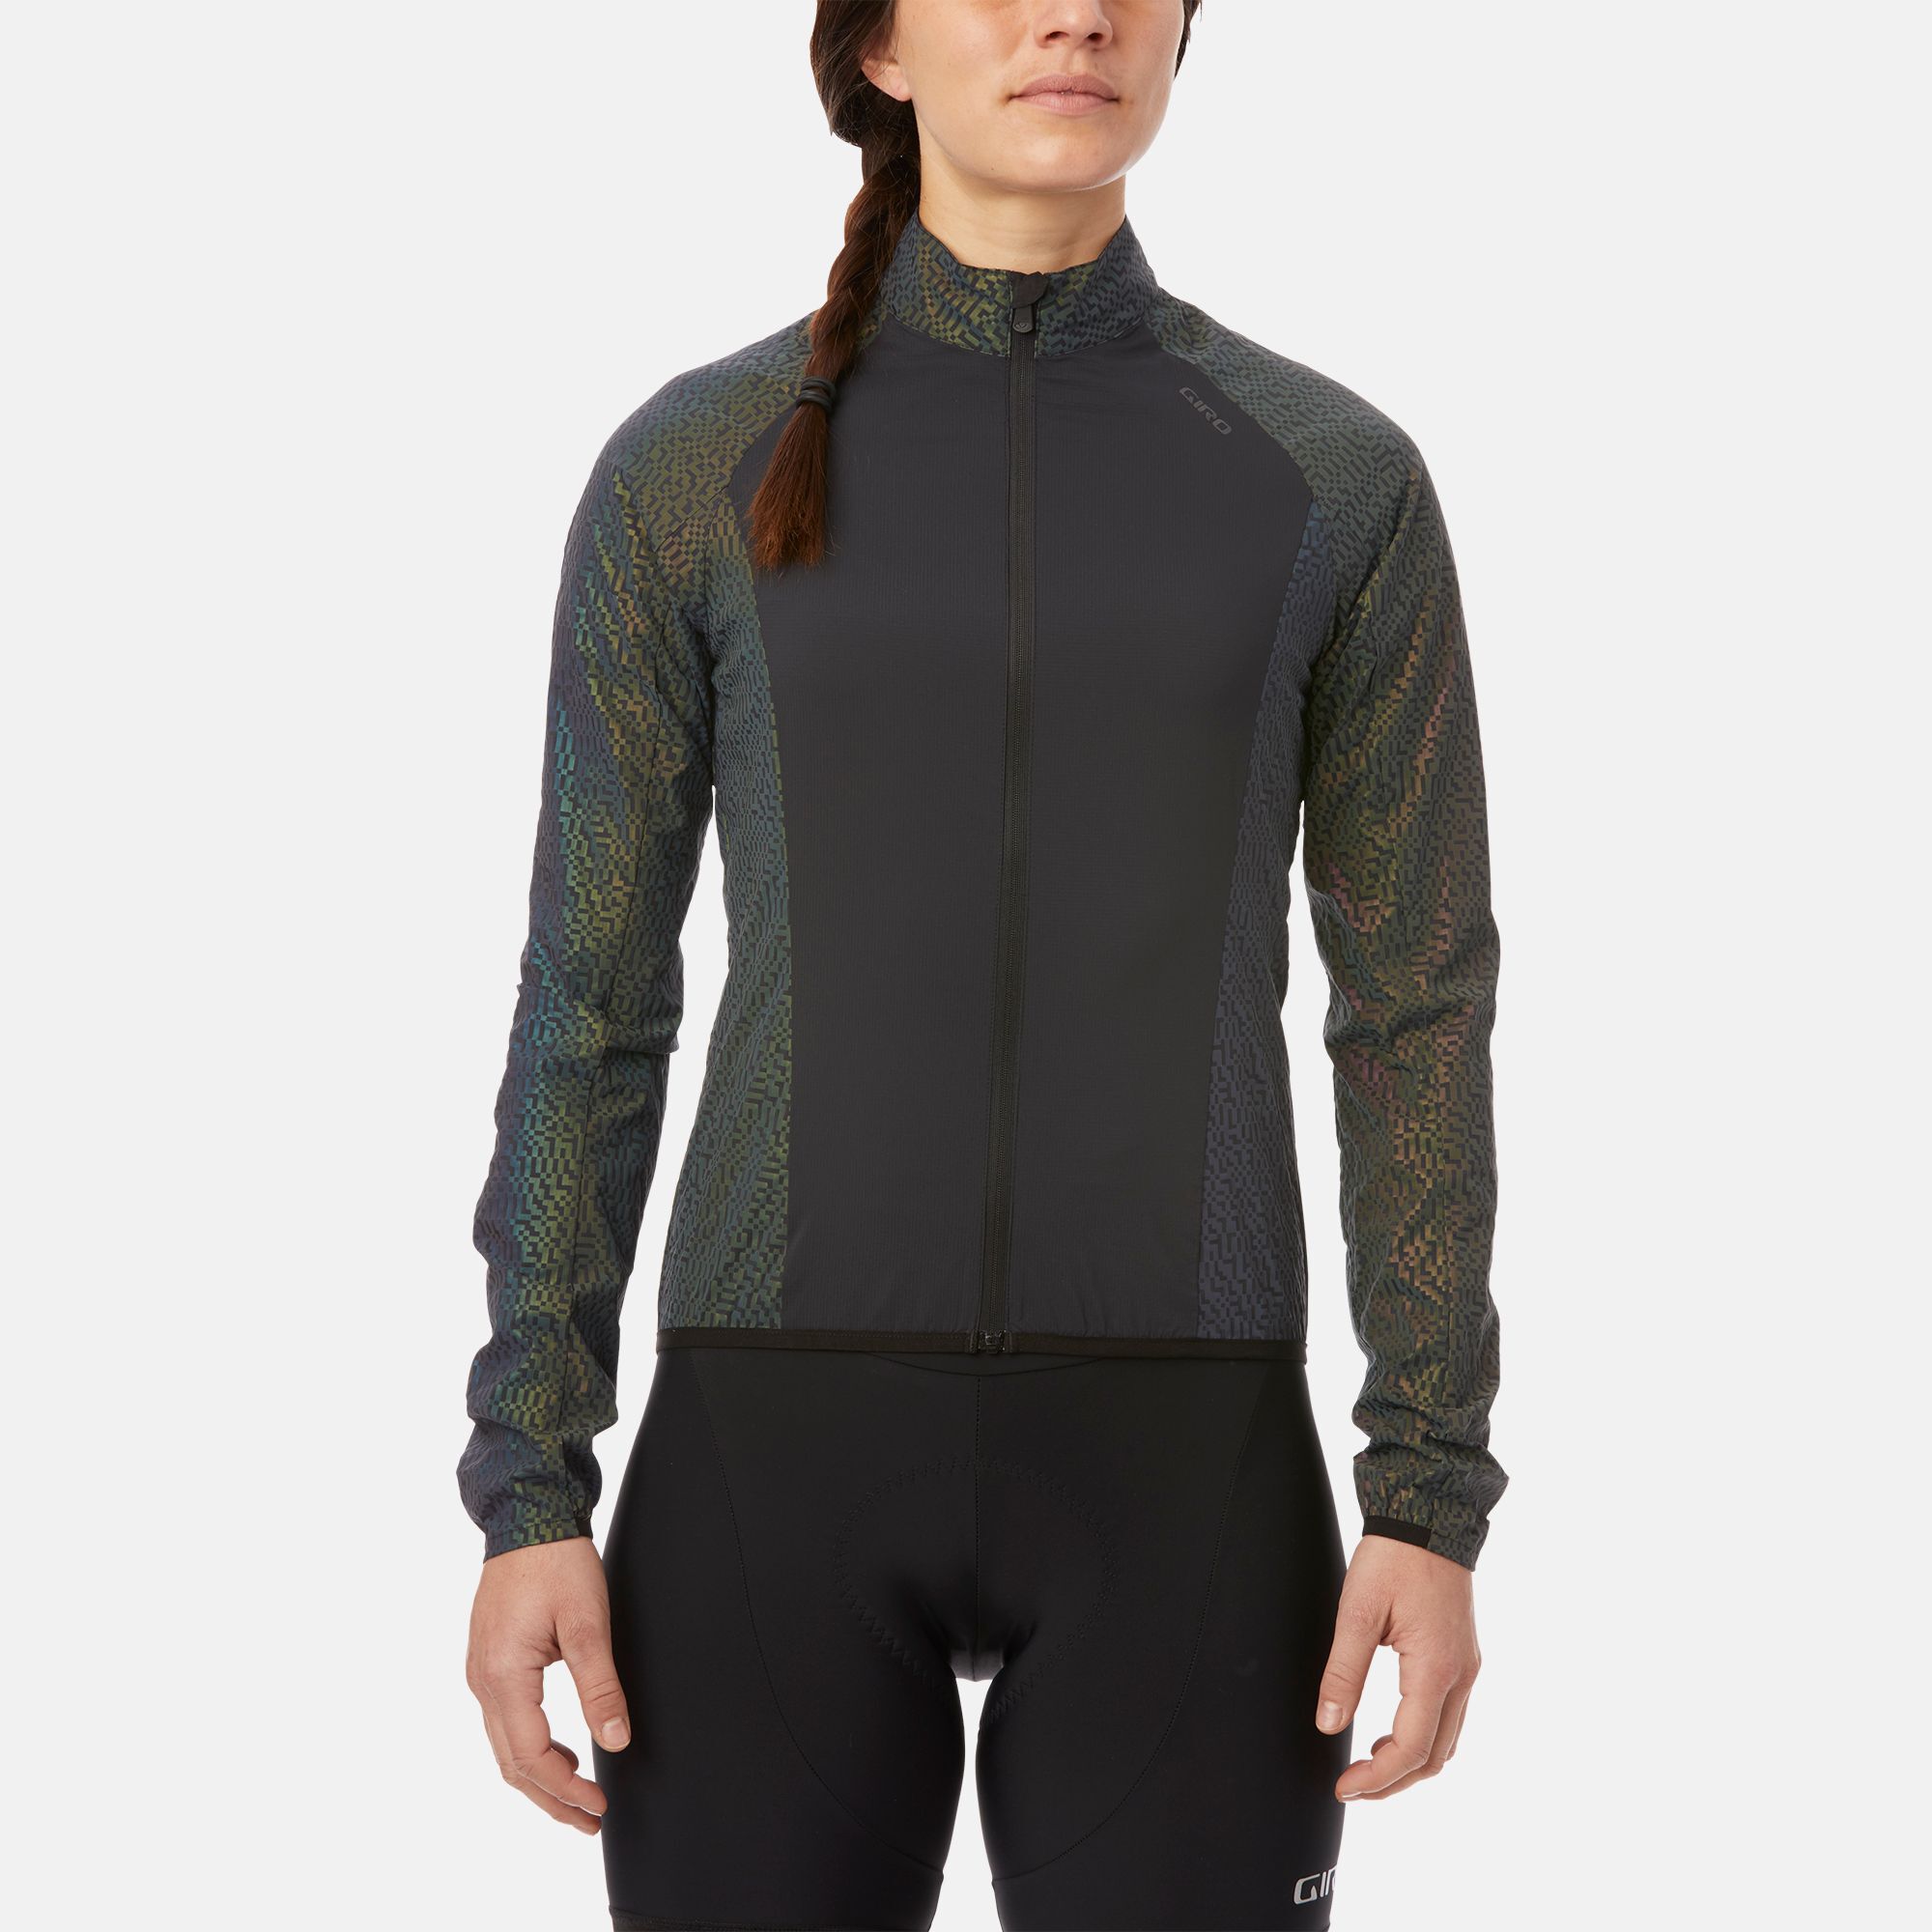 Womens Giro Chrono Expert Reflective Wind Jacket